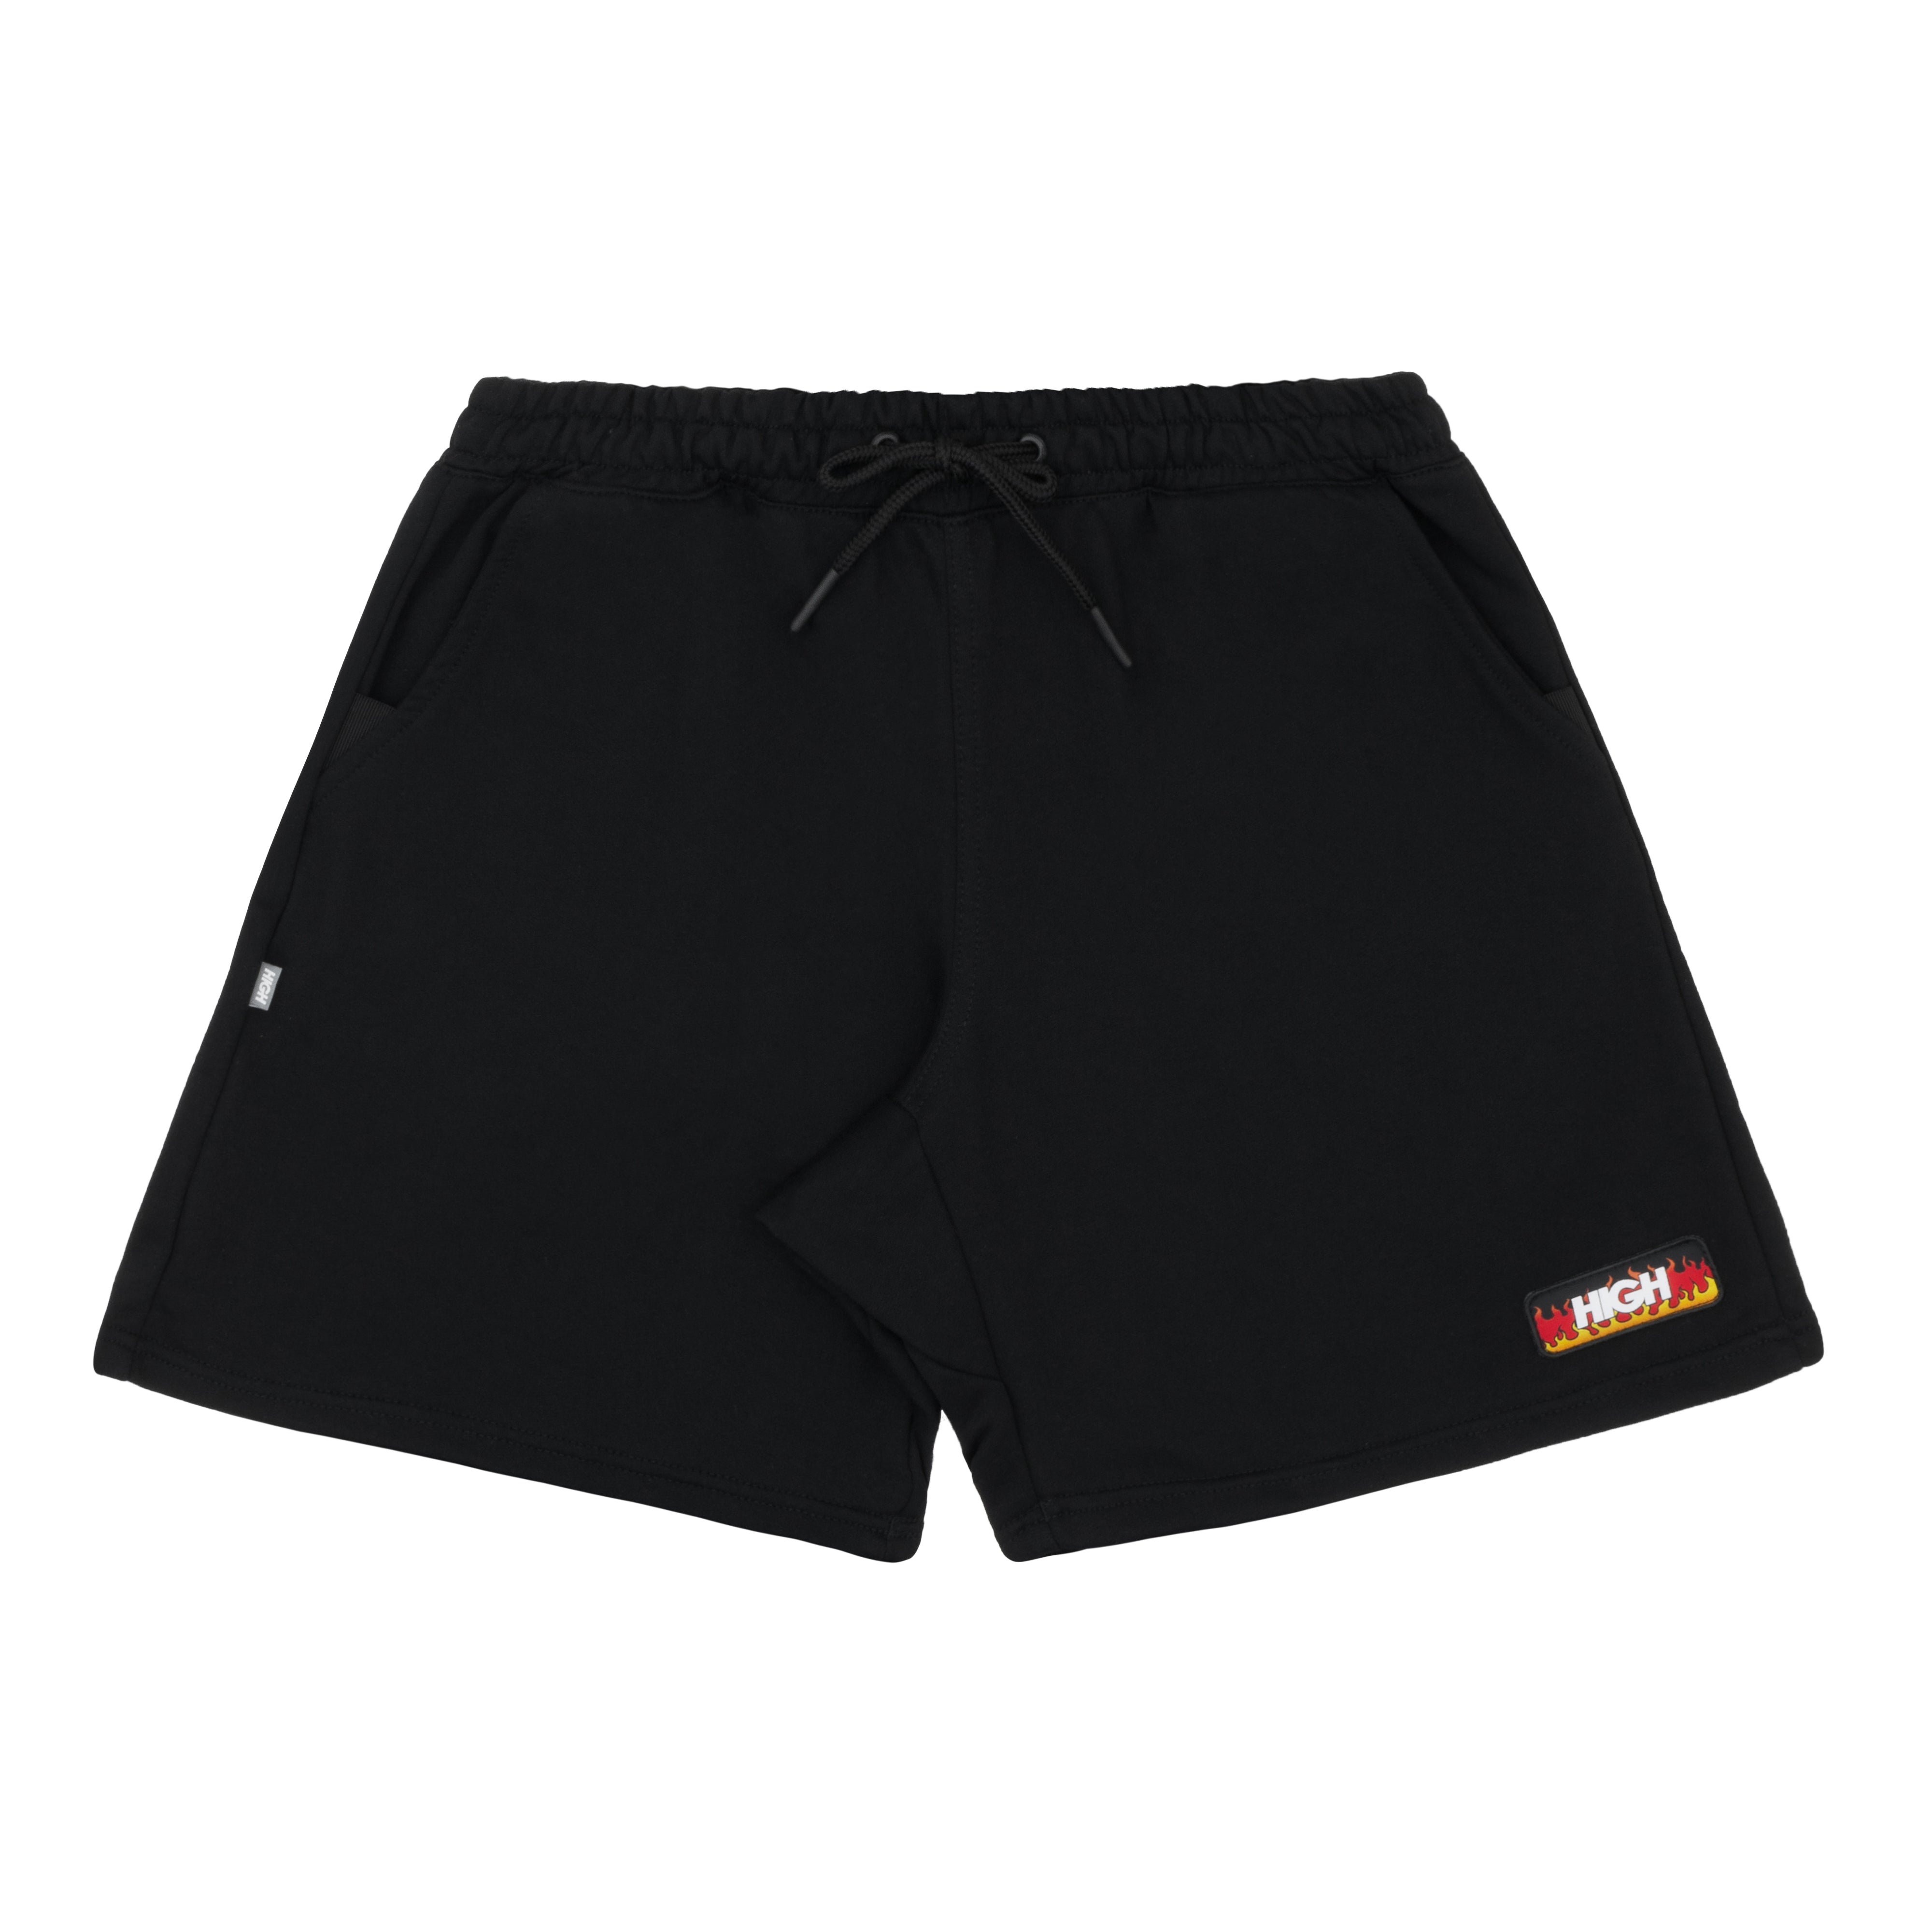 HIGH - Sweat Shorts Flammes Black